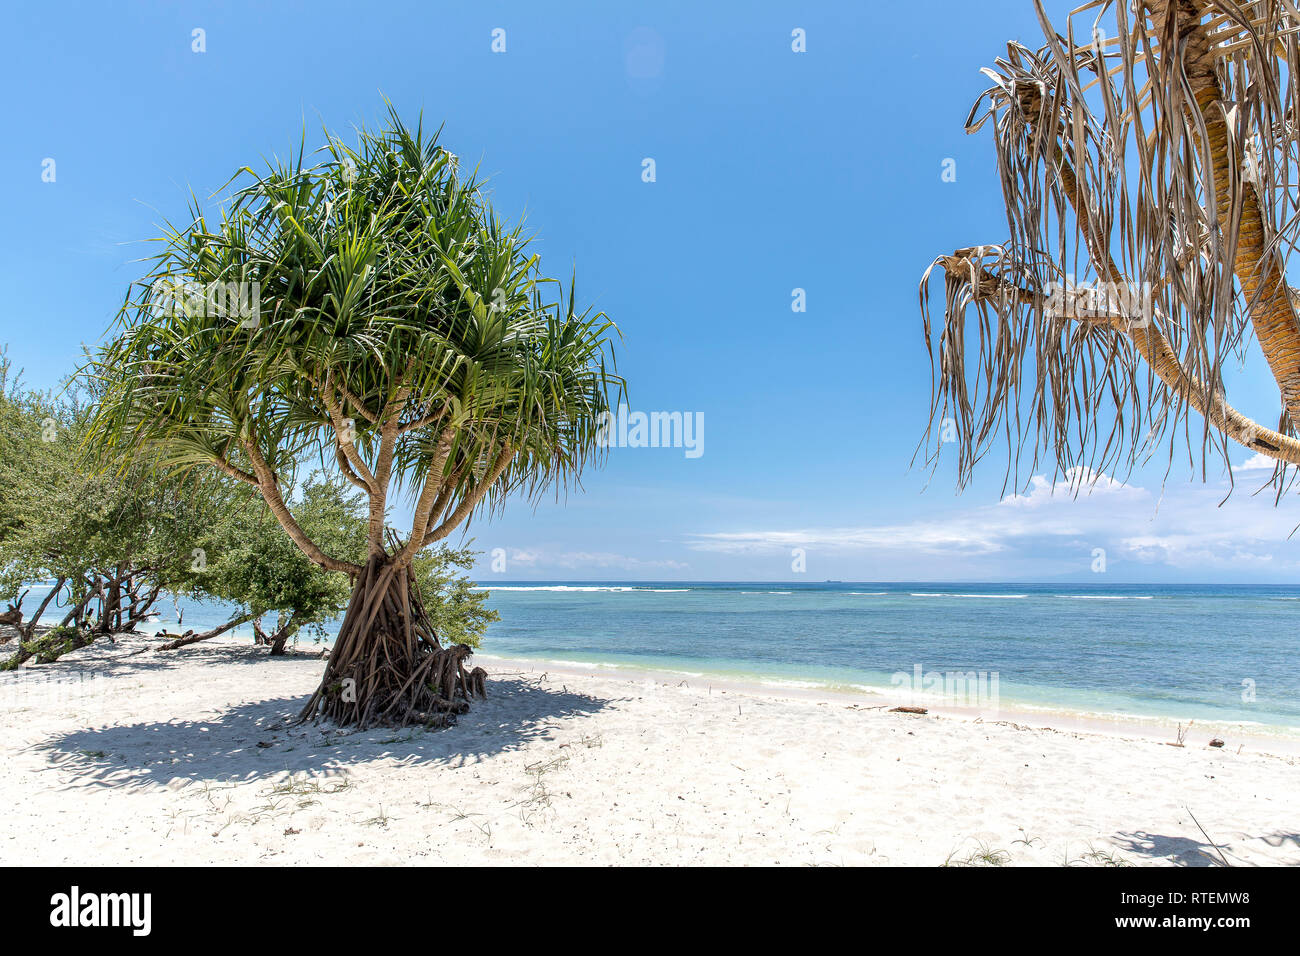 Tropical trees on the coast of Gili Trawangan in Indonesia. Stock Photo